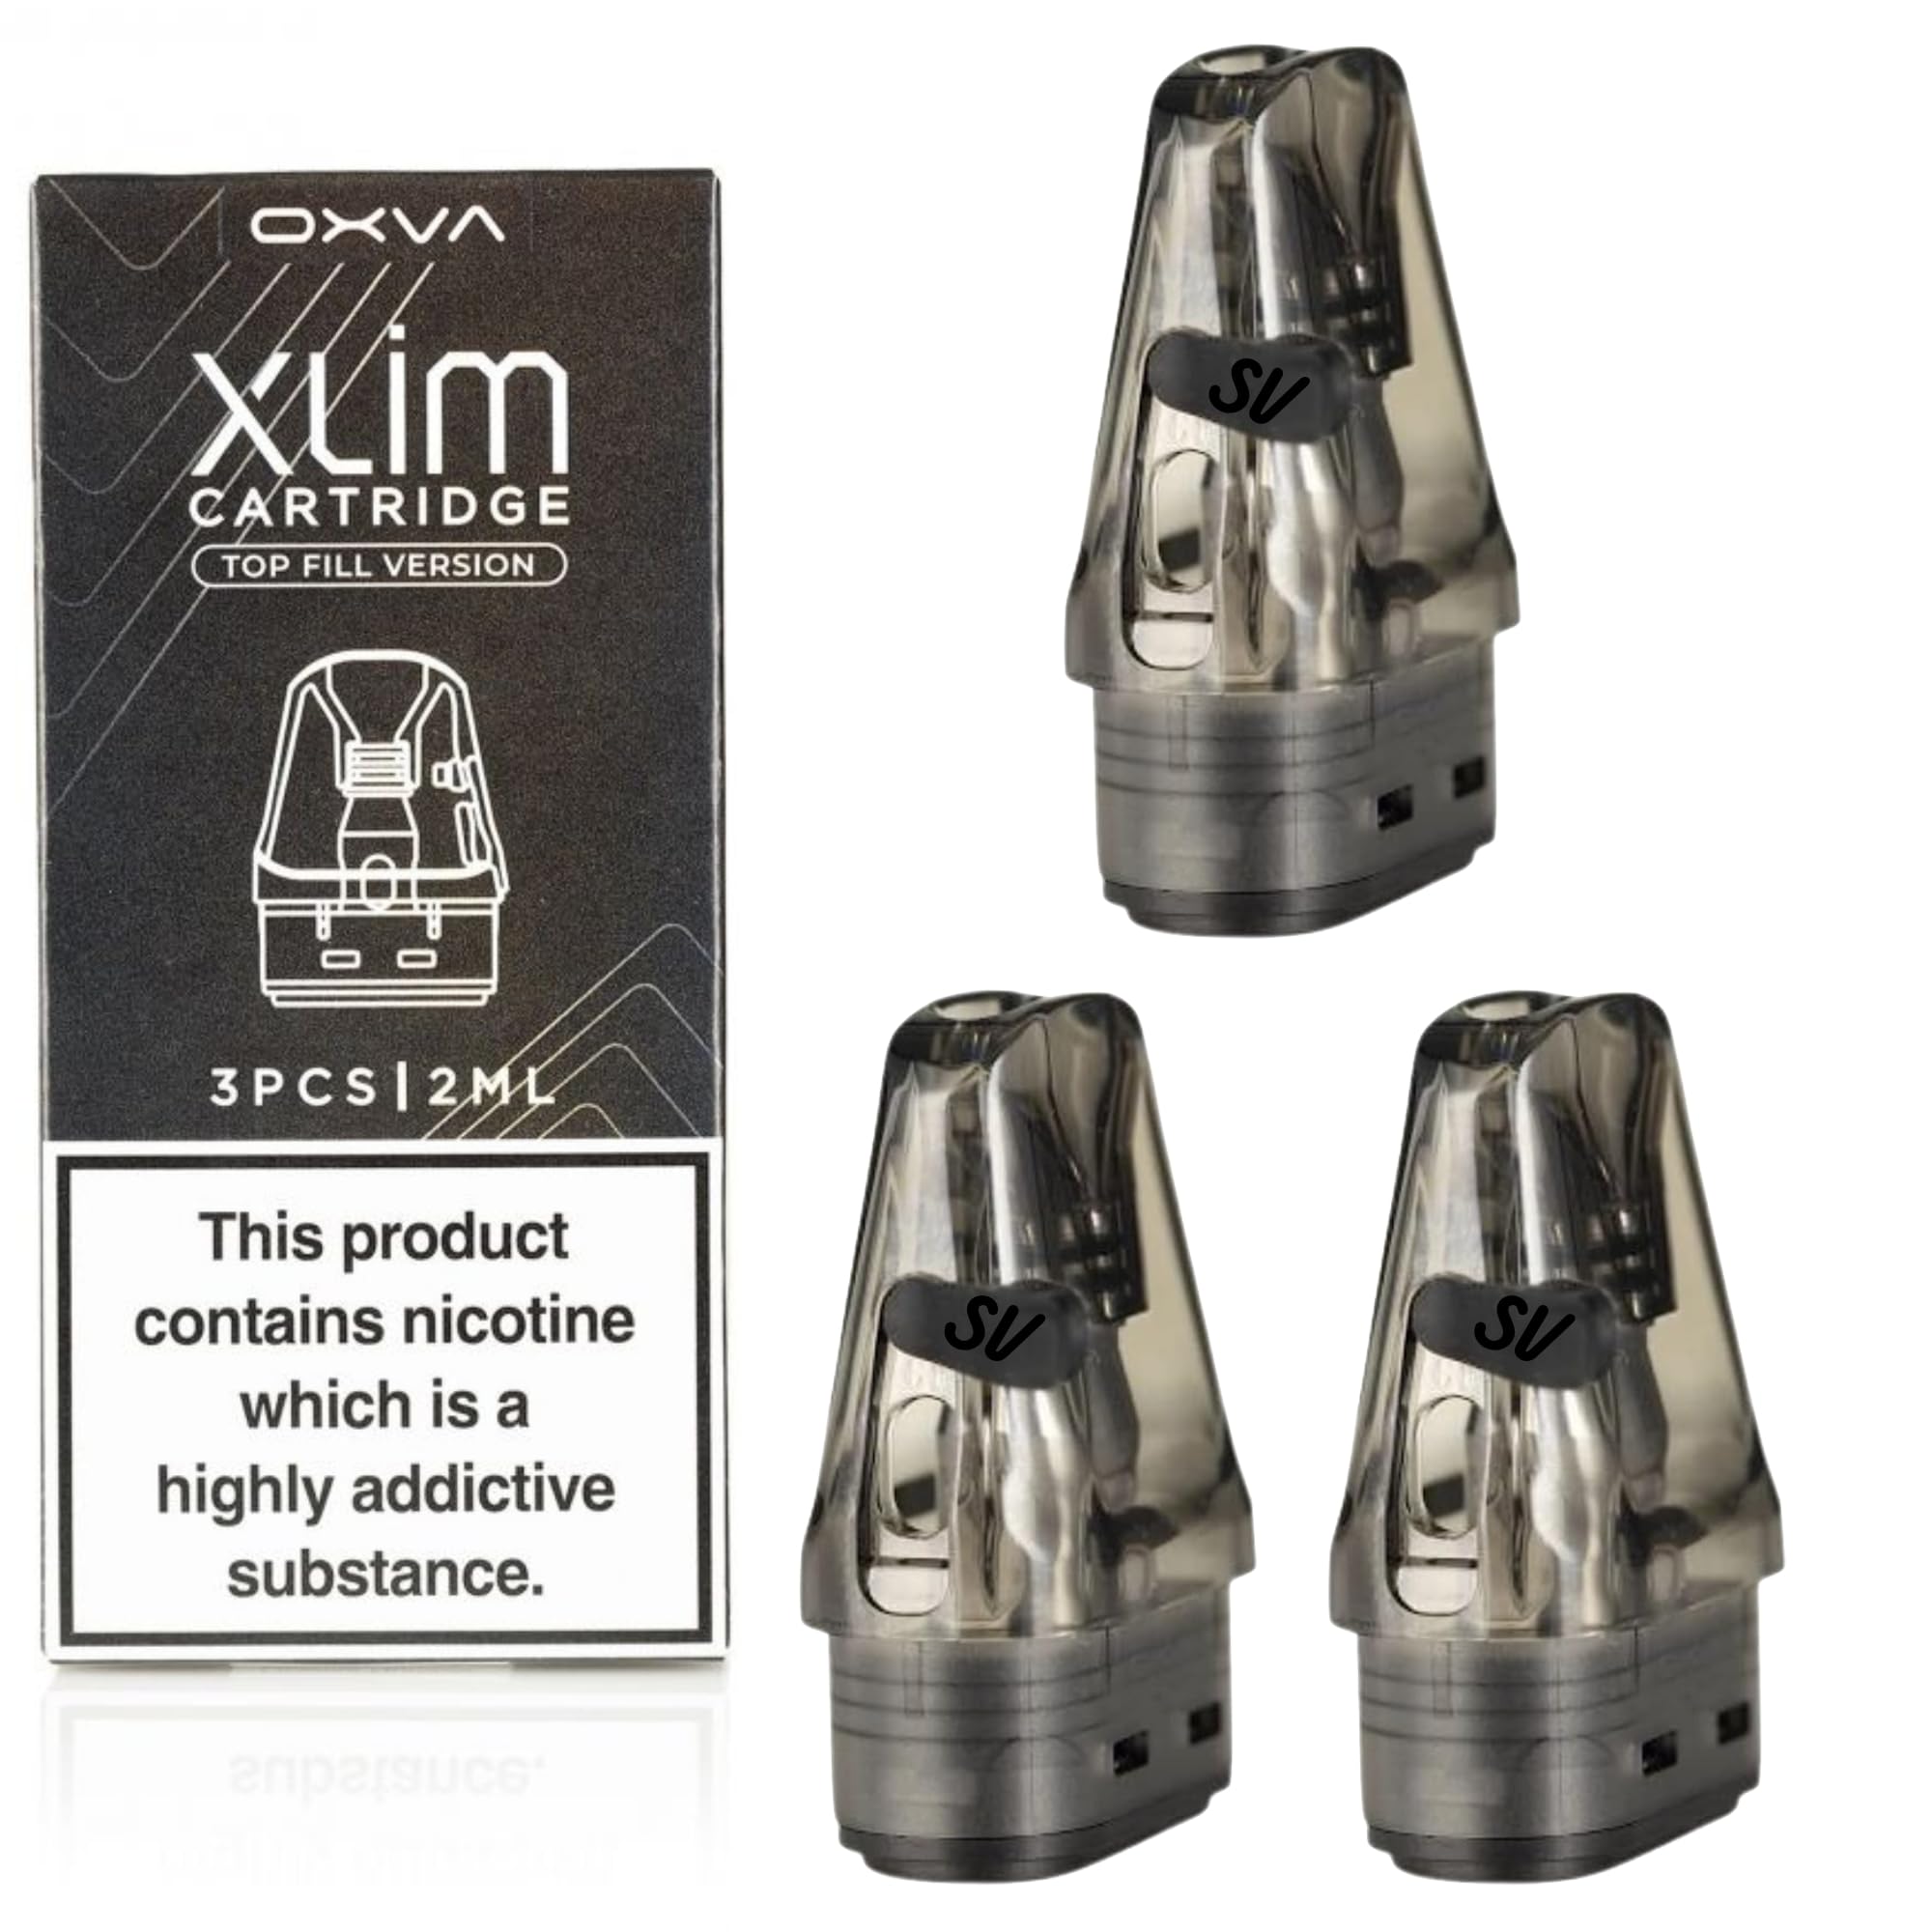 OXVA Xlim Top Fill Cartridges (Pack of 3)